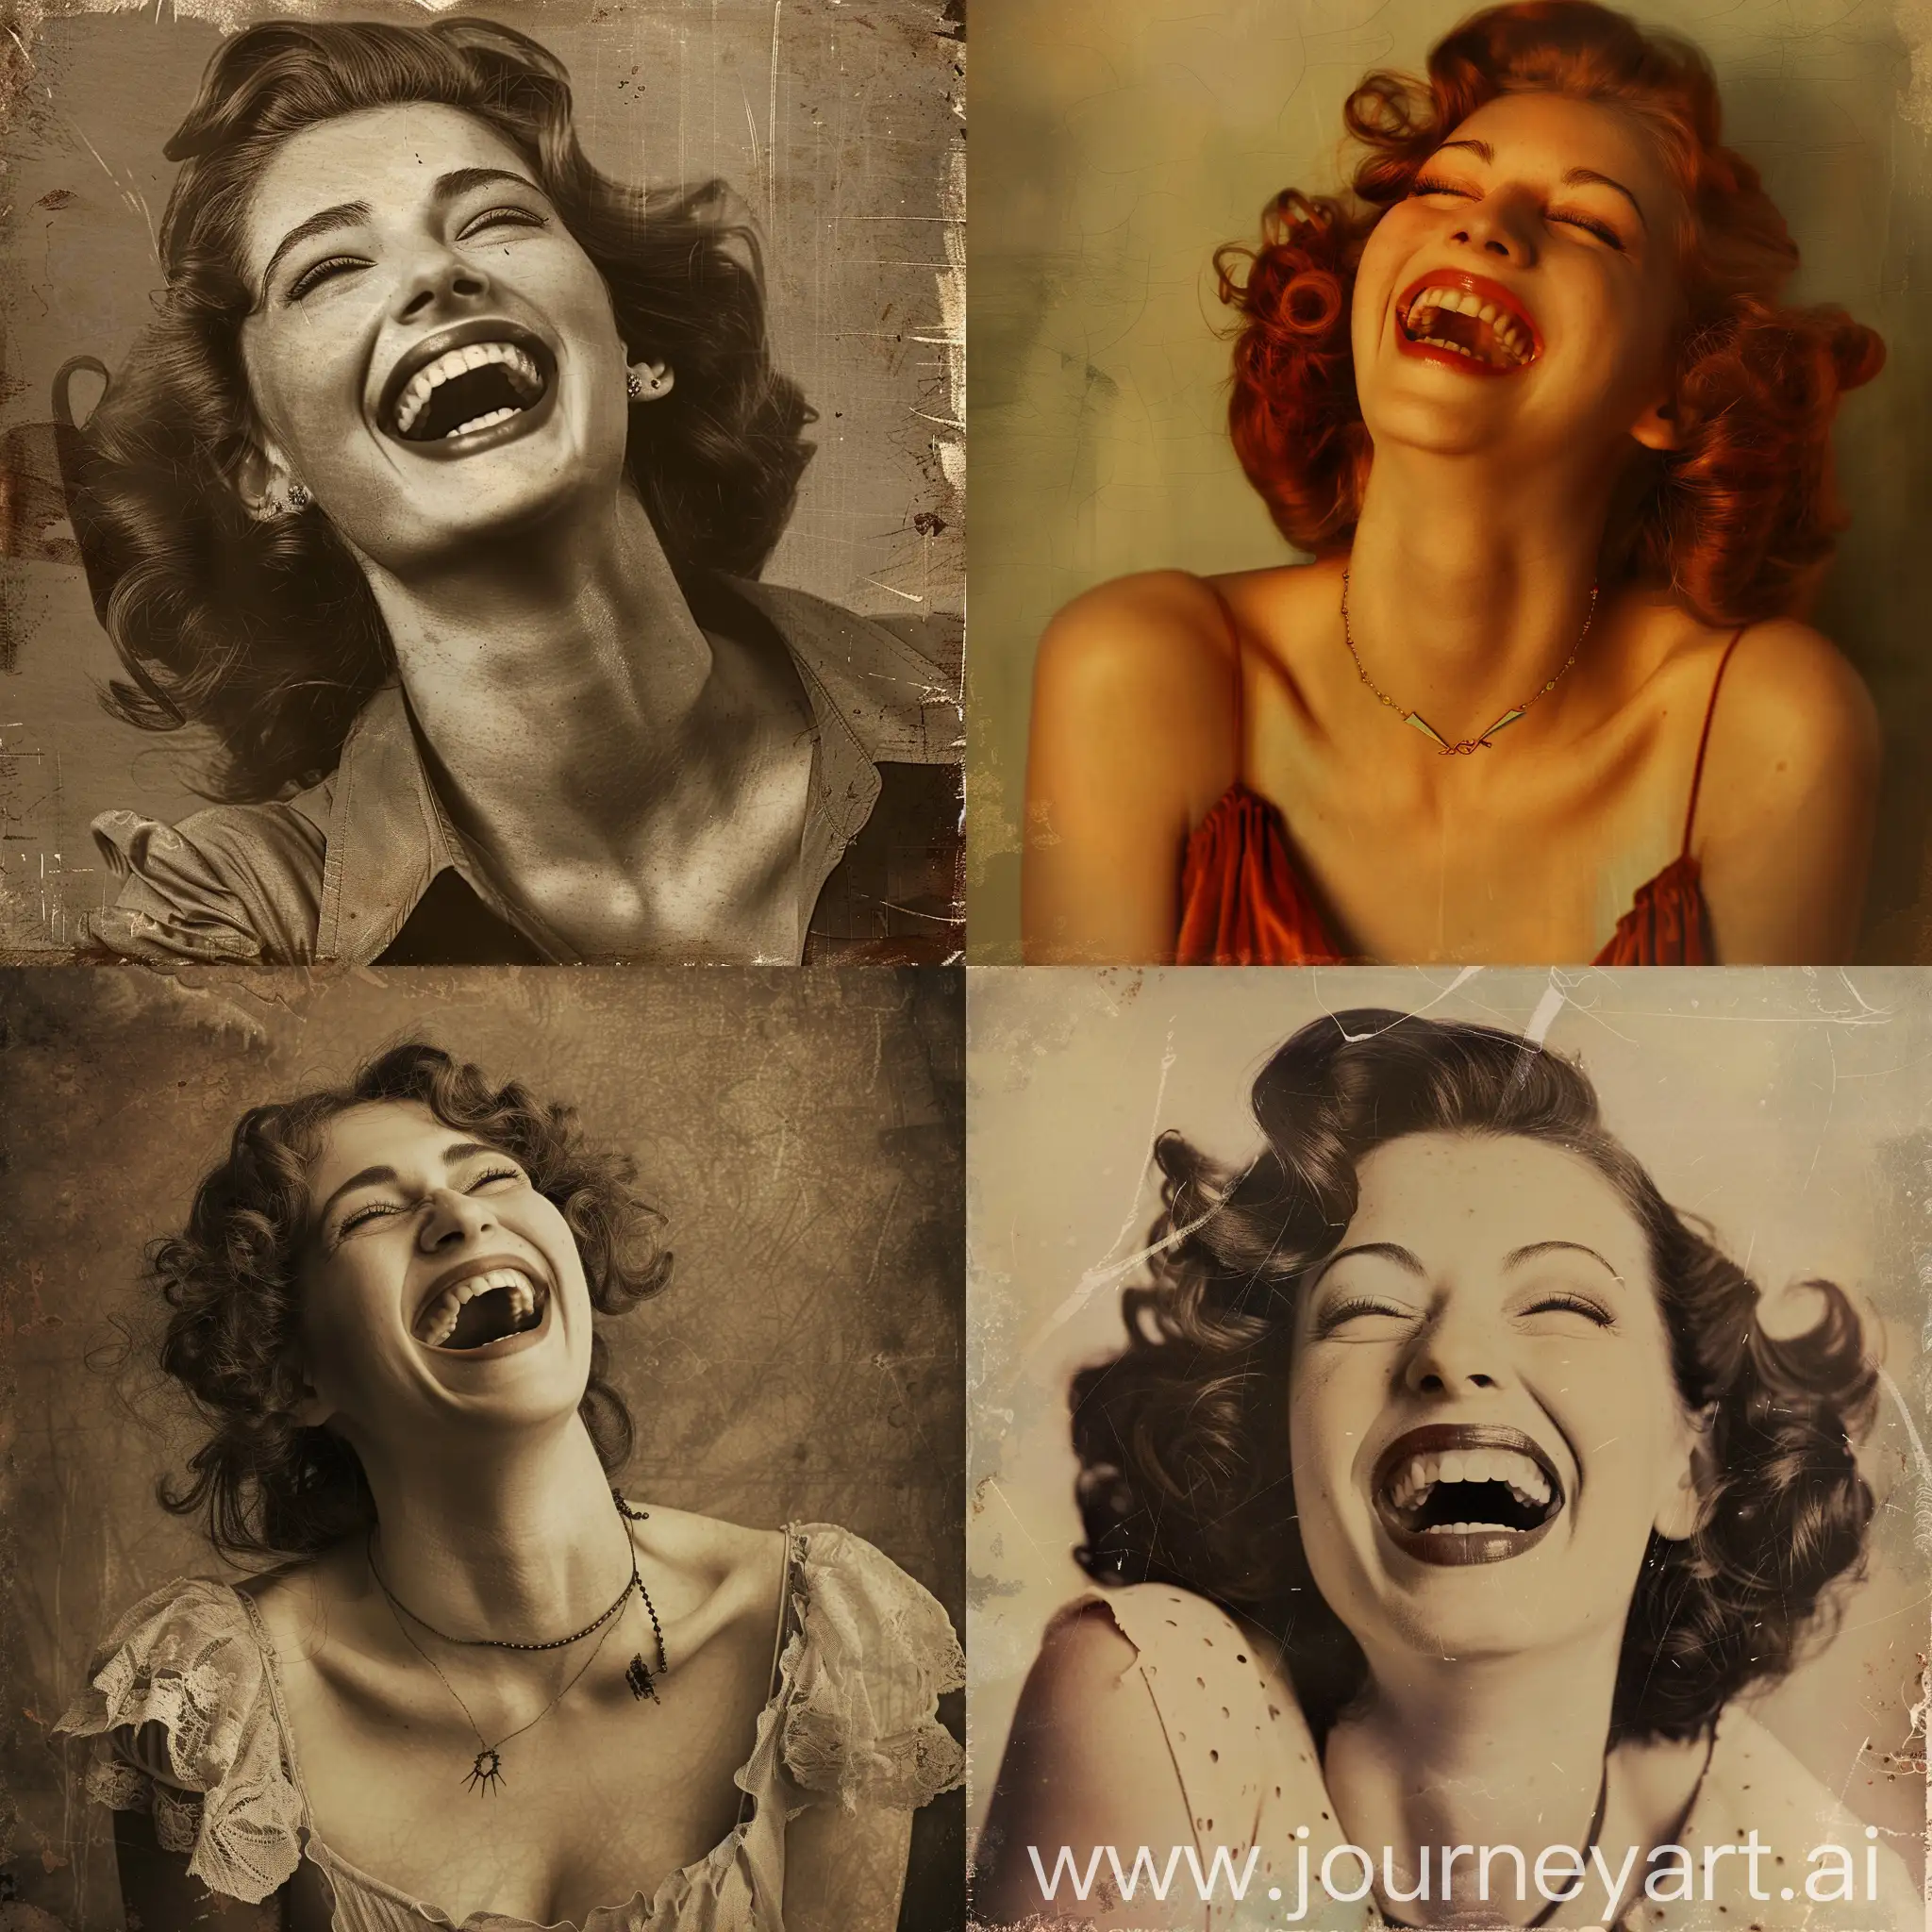 Vintage-Woman-Laughing-Joyfully-in-Realistic-Portrait